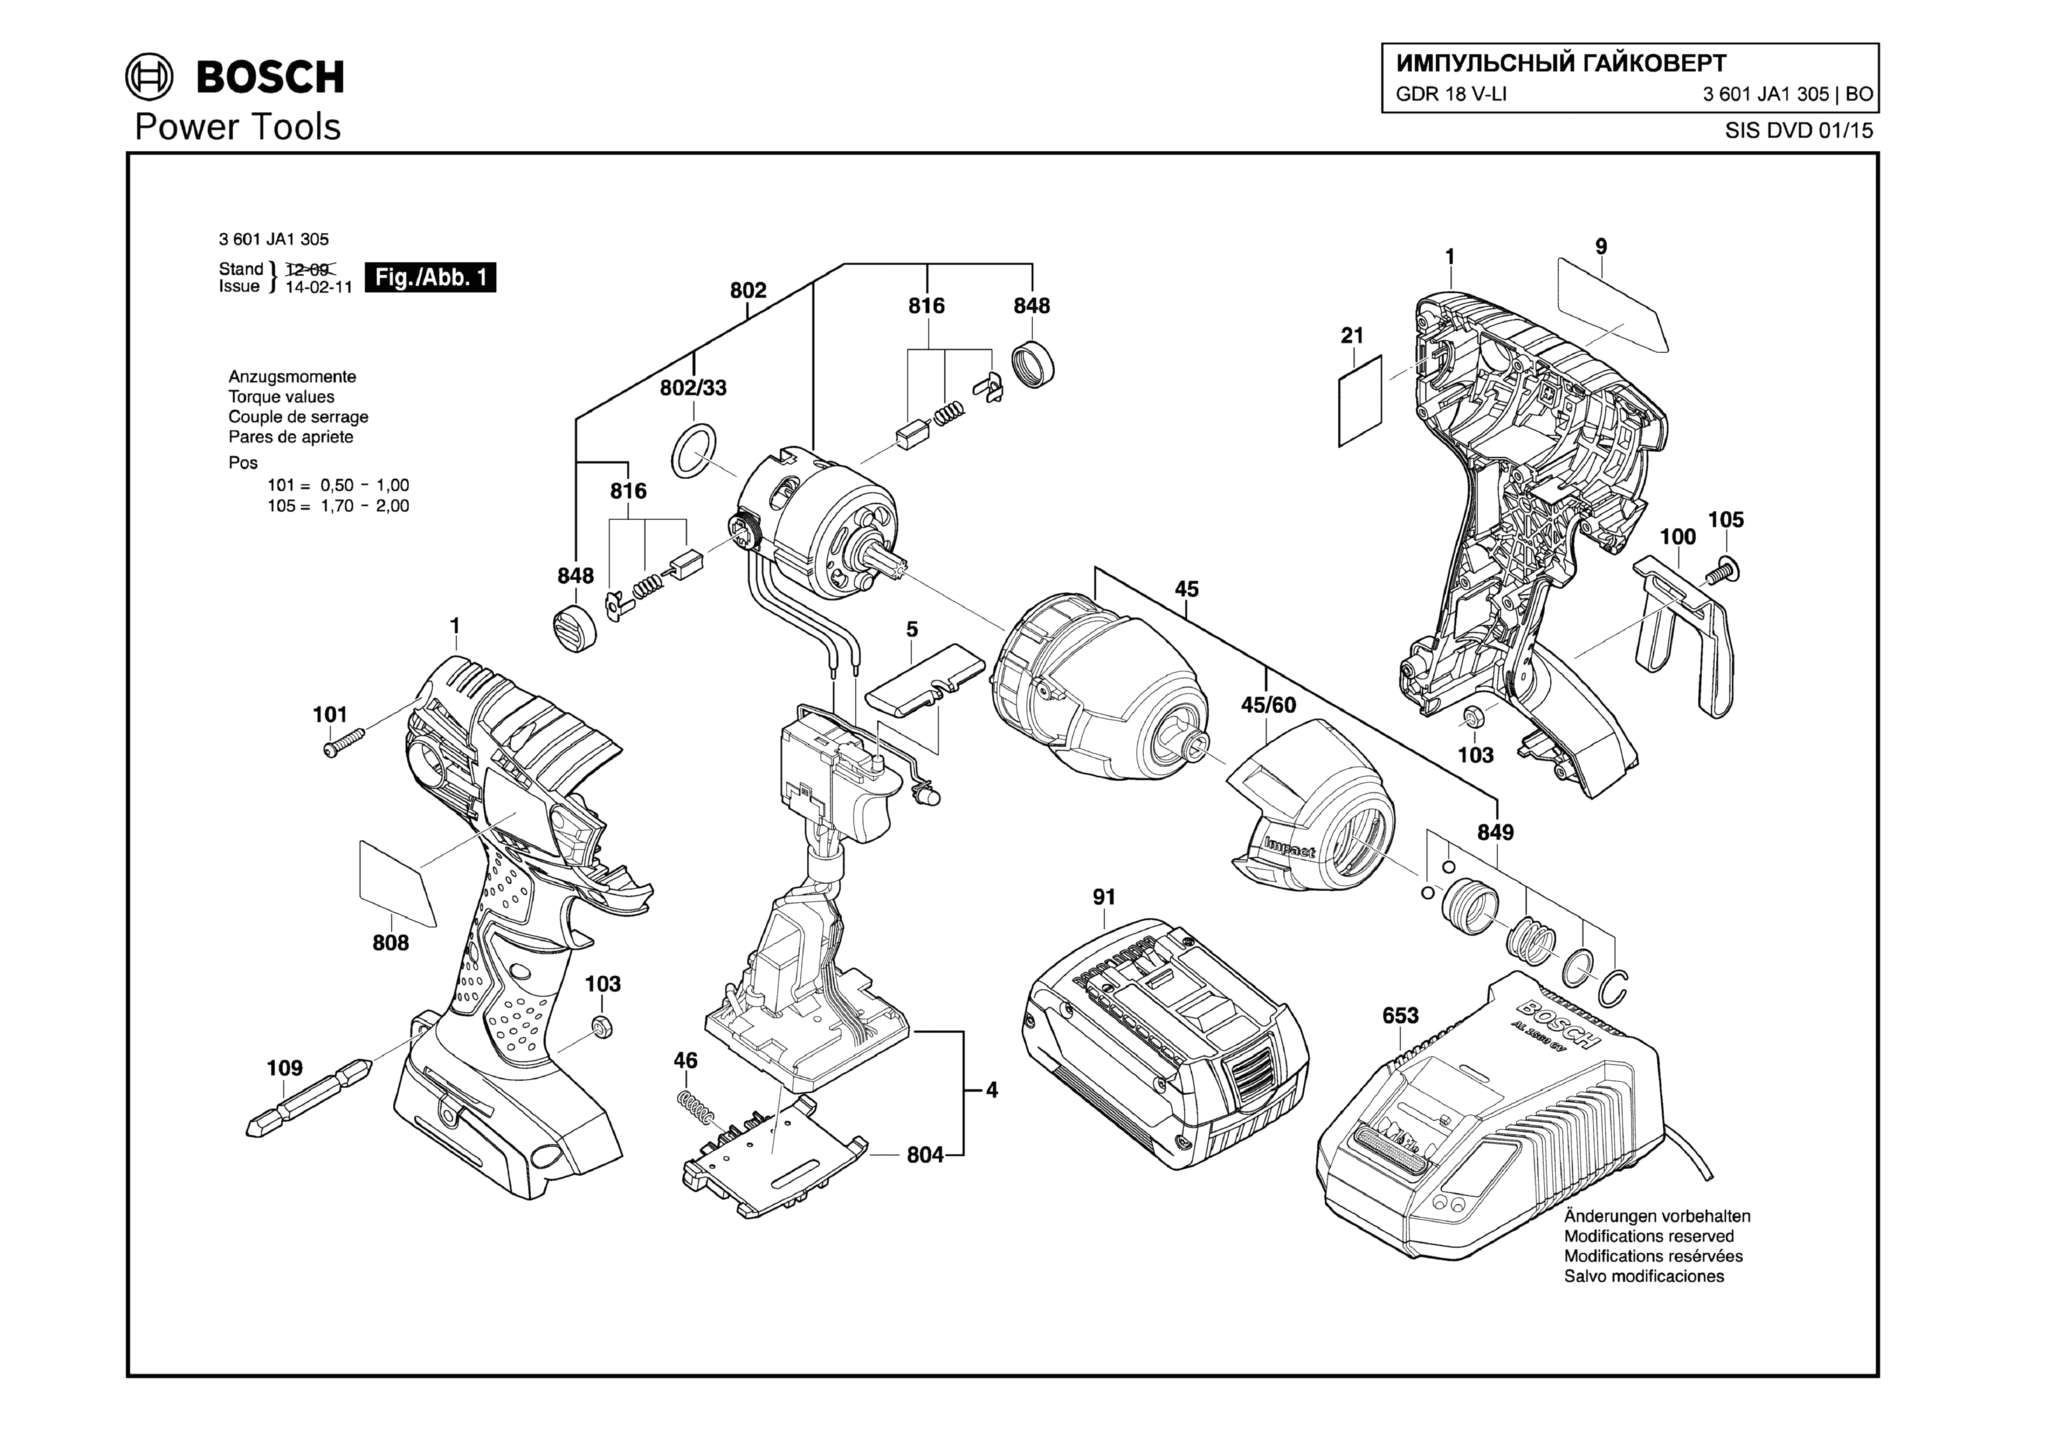 Запчасти, схема и деталировка Bosch GDR 18 V-LI (ТИП 3601JA1305)